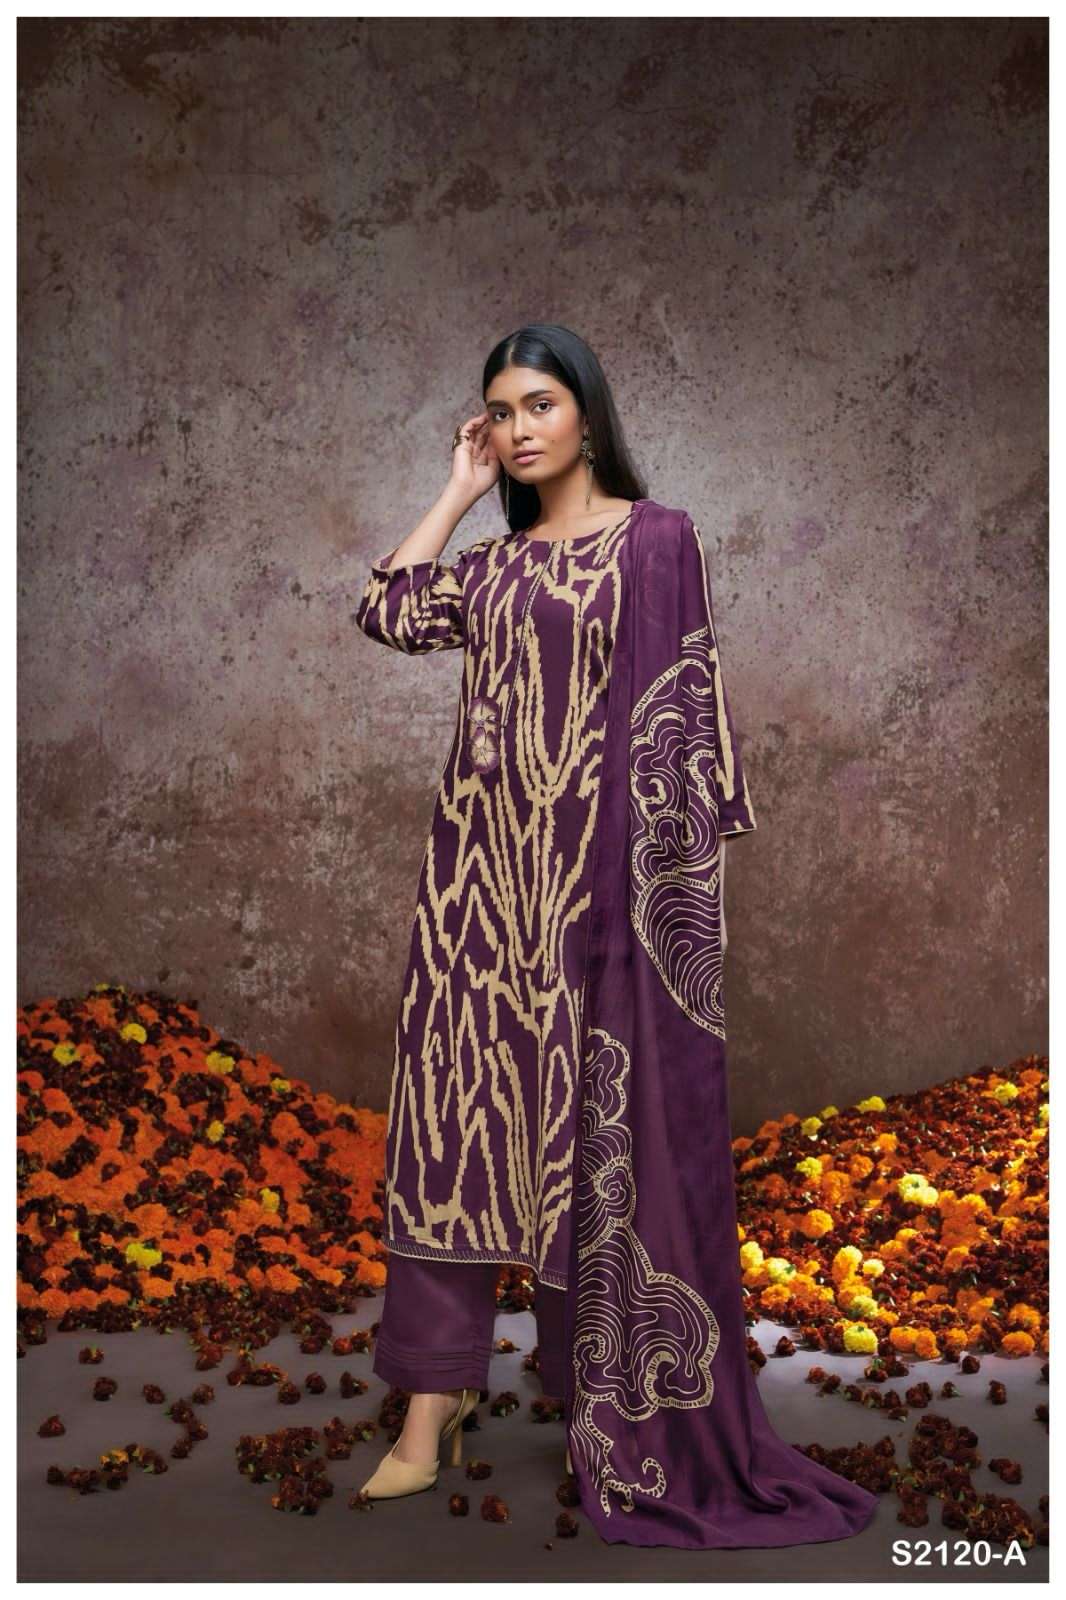 ganga orla 2120 premium cotton silk fancy salwar kameez wholesale price surat